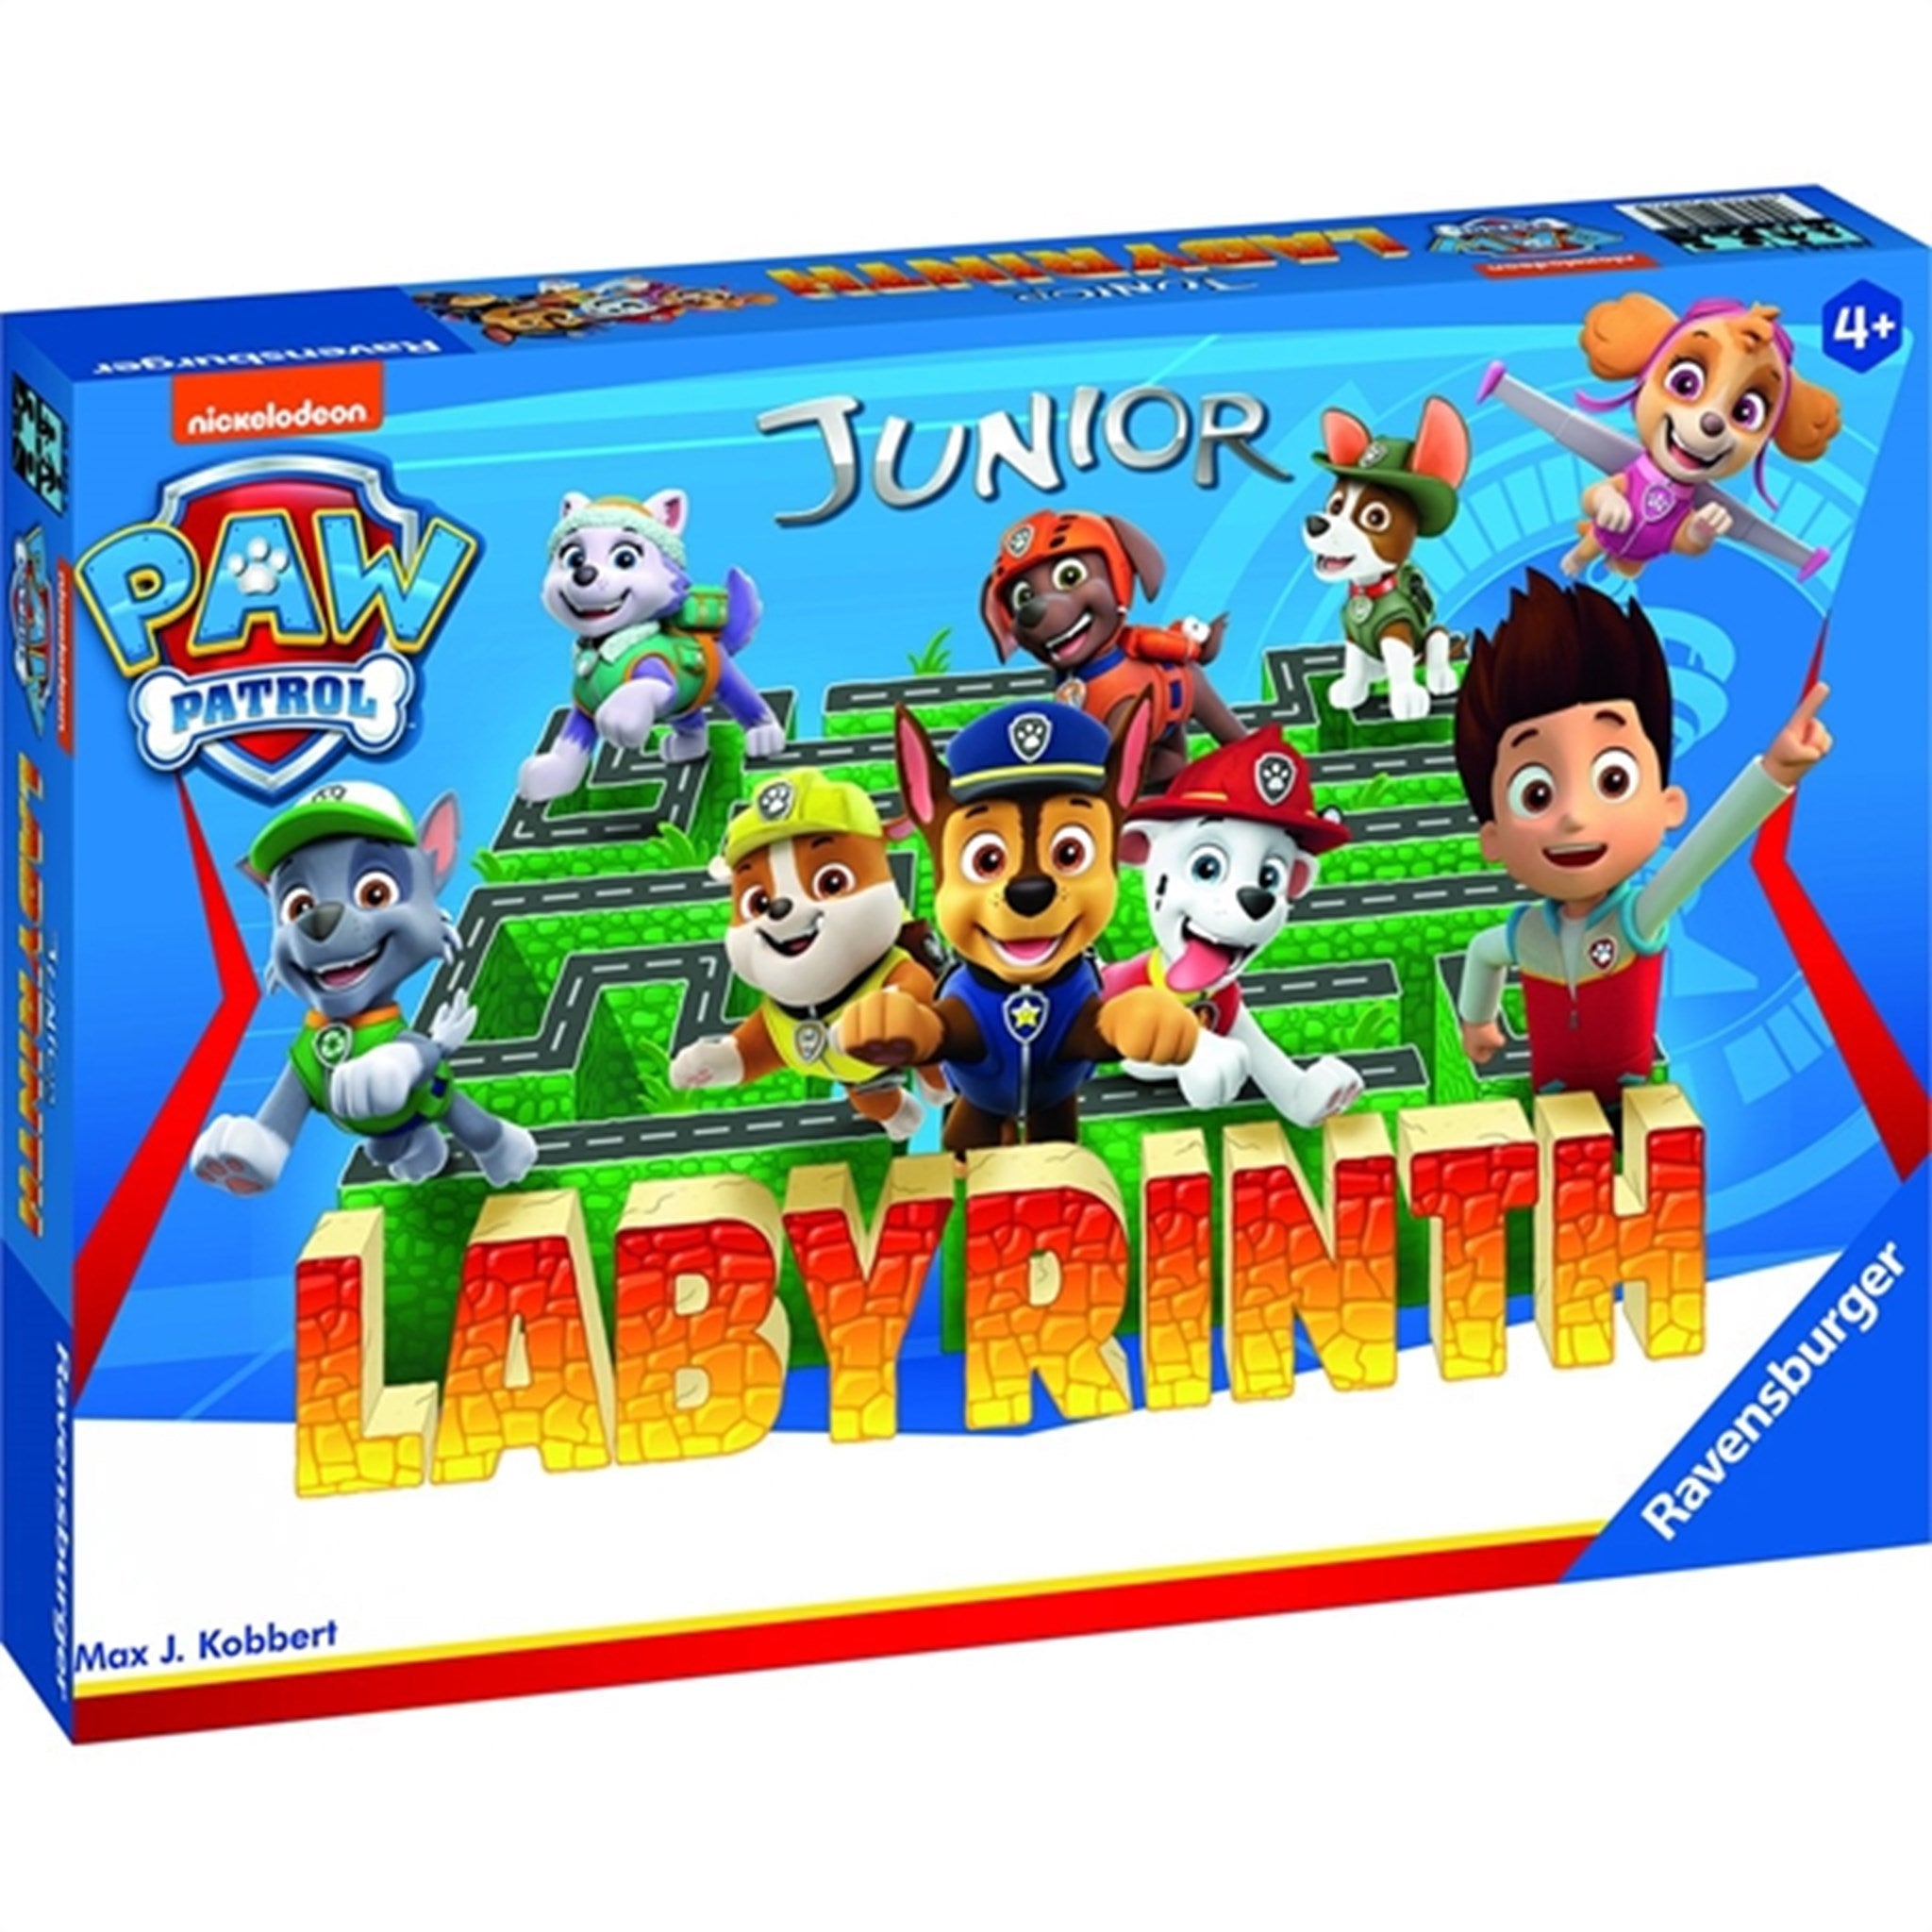 Ravensburger Paw Patrol Junior Labyrint Board Game 3